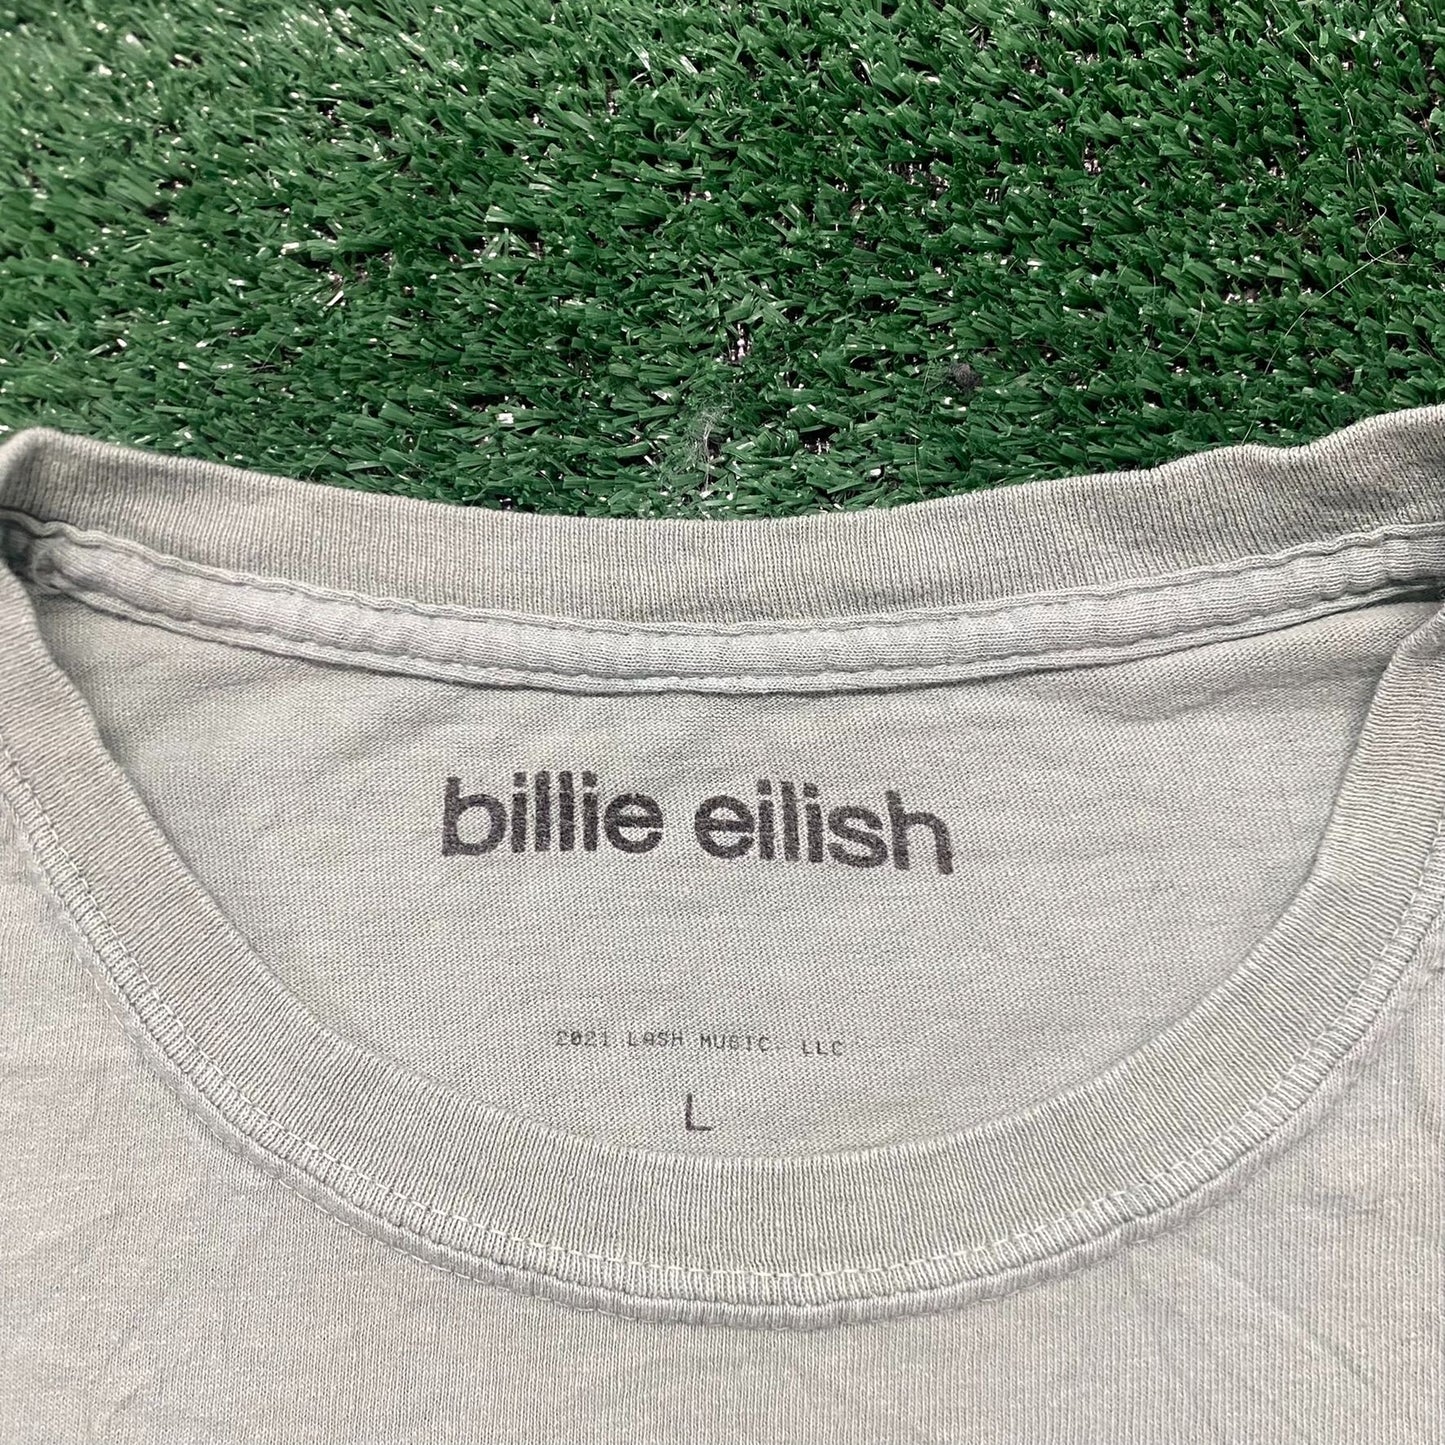 Billie Eilish Happier Than Ever Album Art Pop Music Band Tee